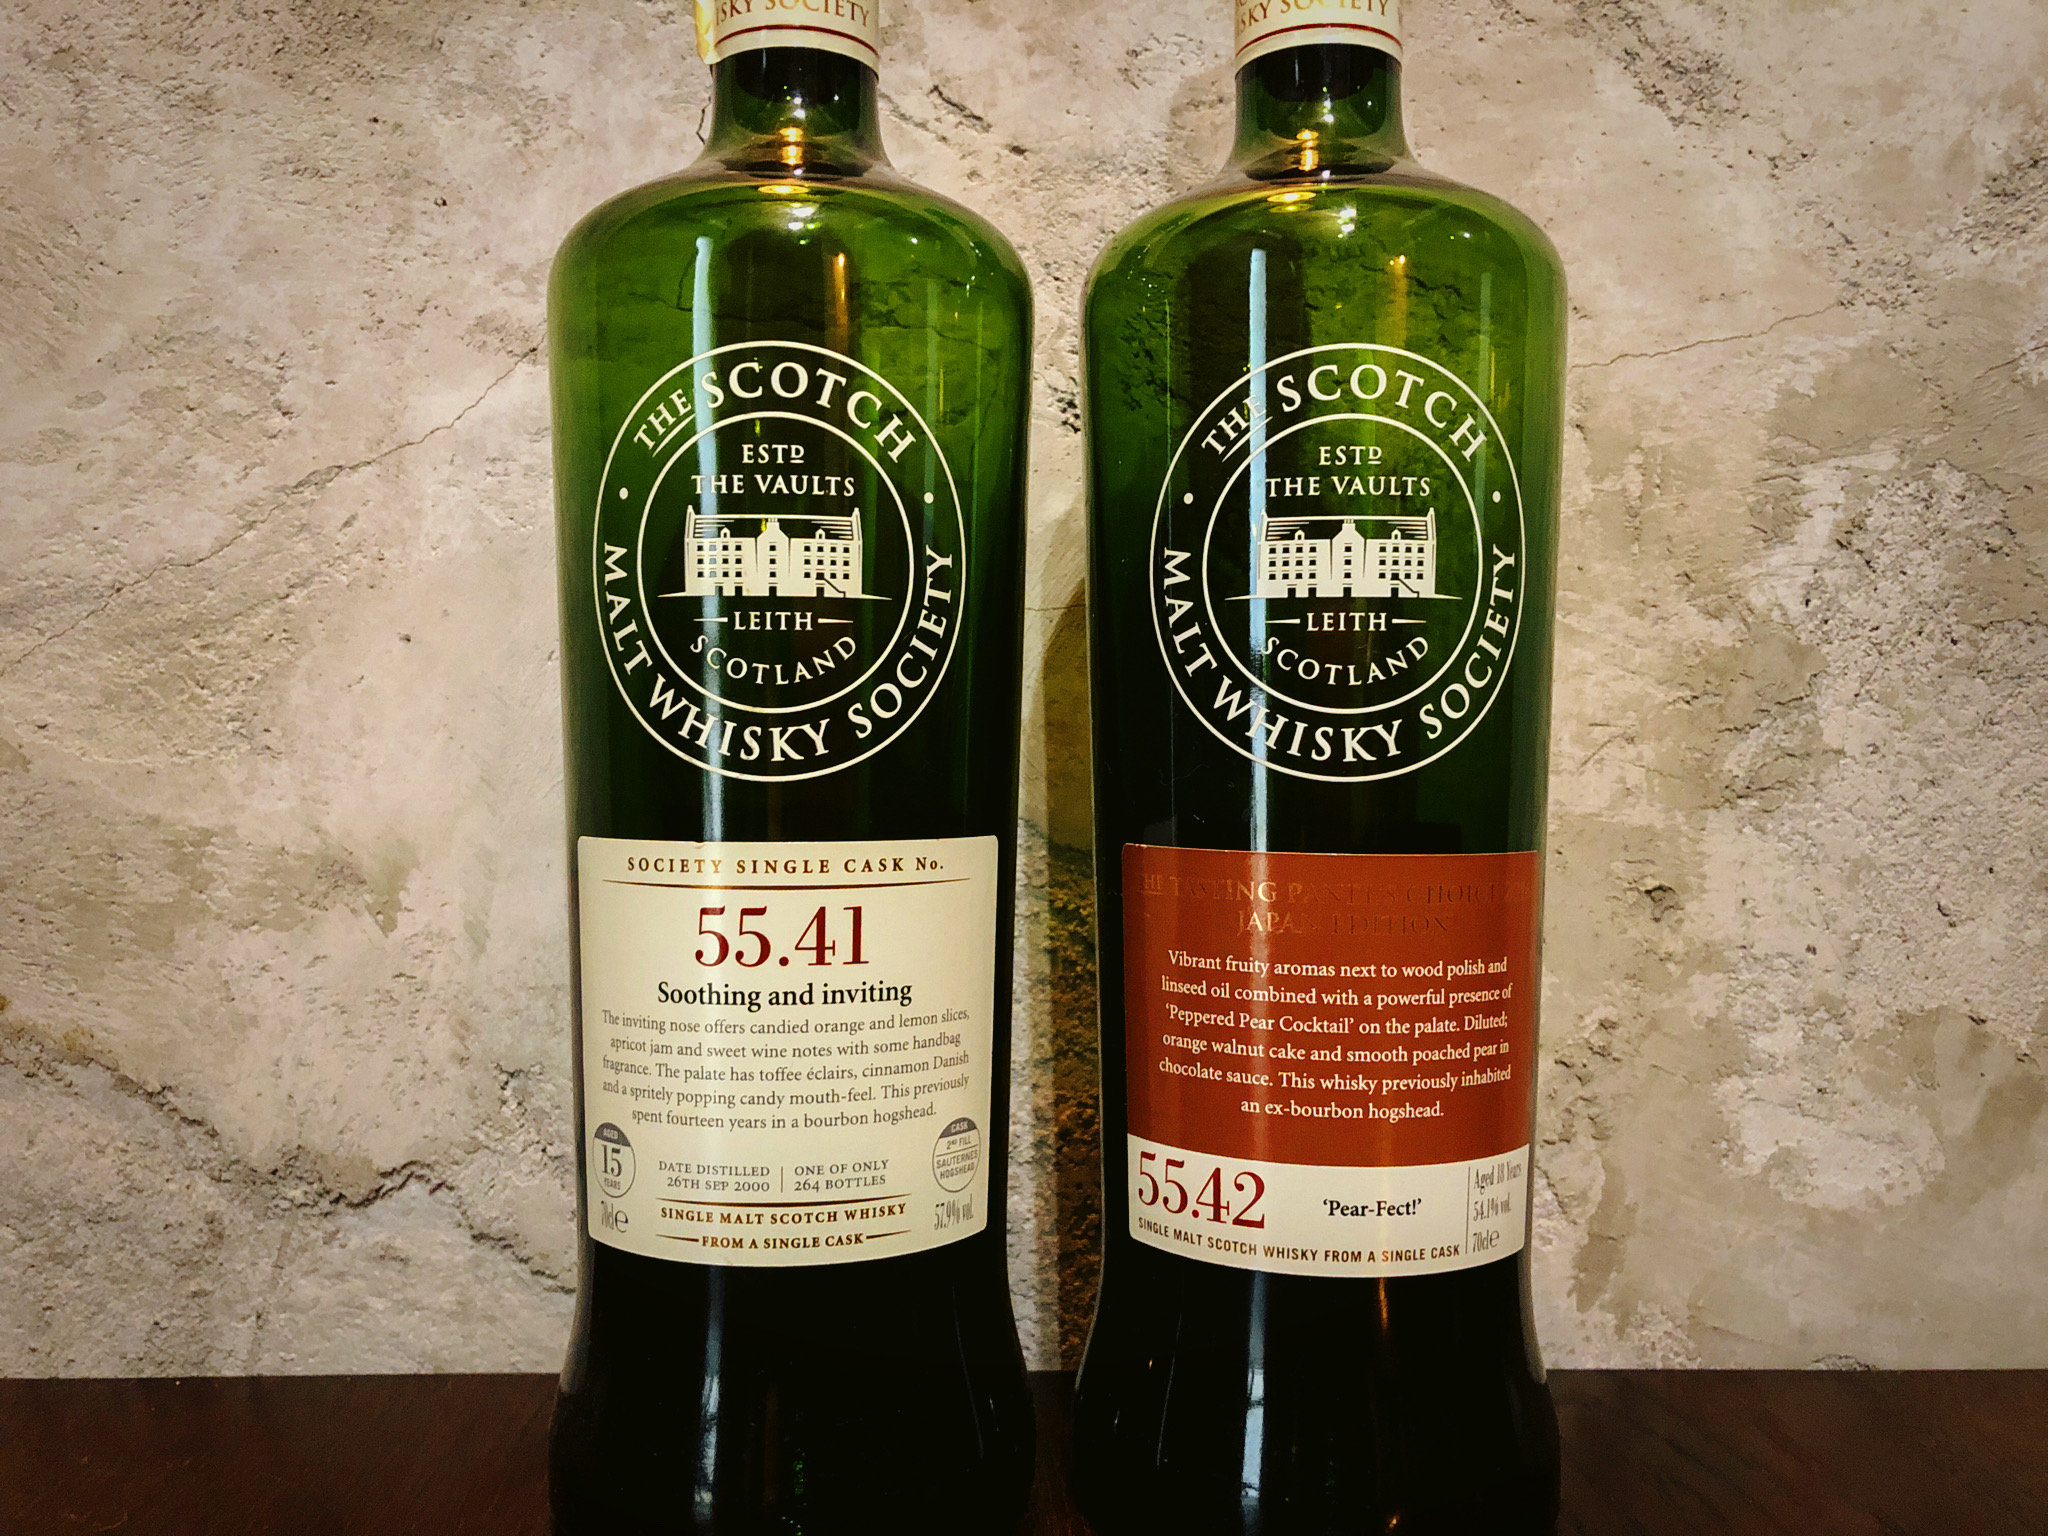 Royal Brackla The Scotch Malt Whisky Society / VinSanto - BAR運営